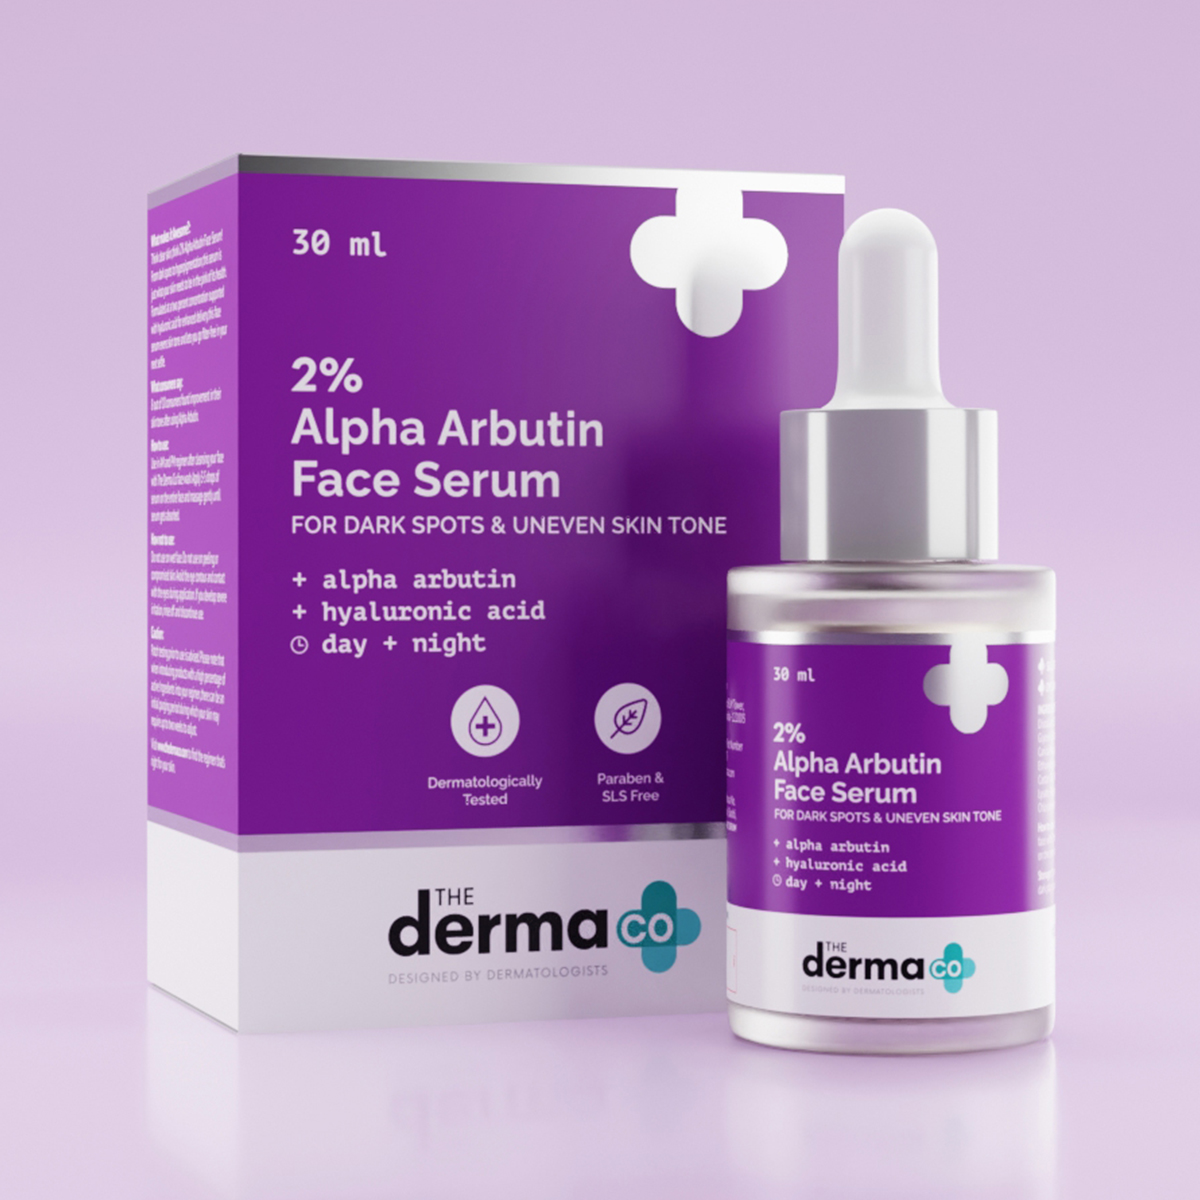 Derma co 2% alpha arbutin face serum